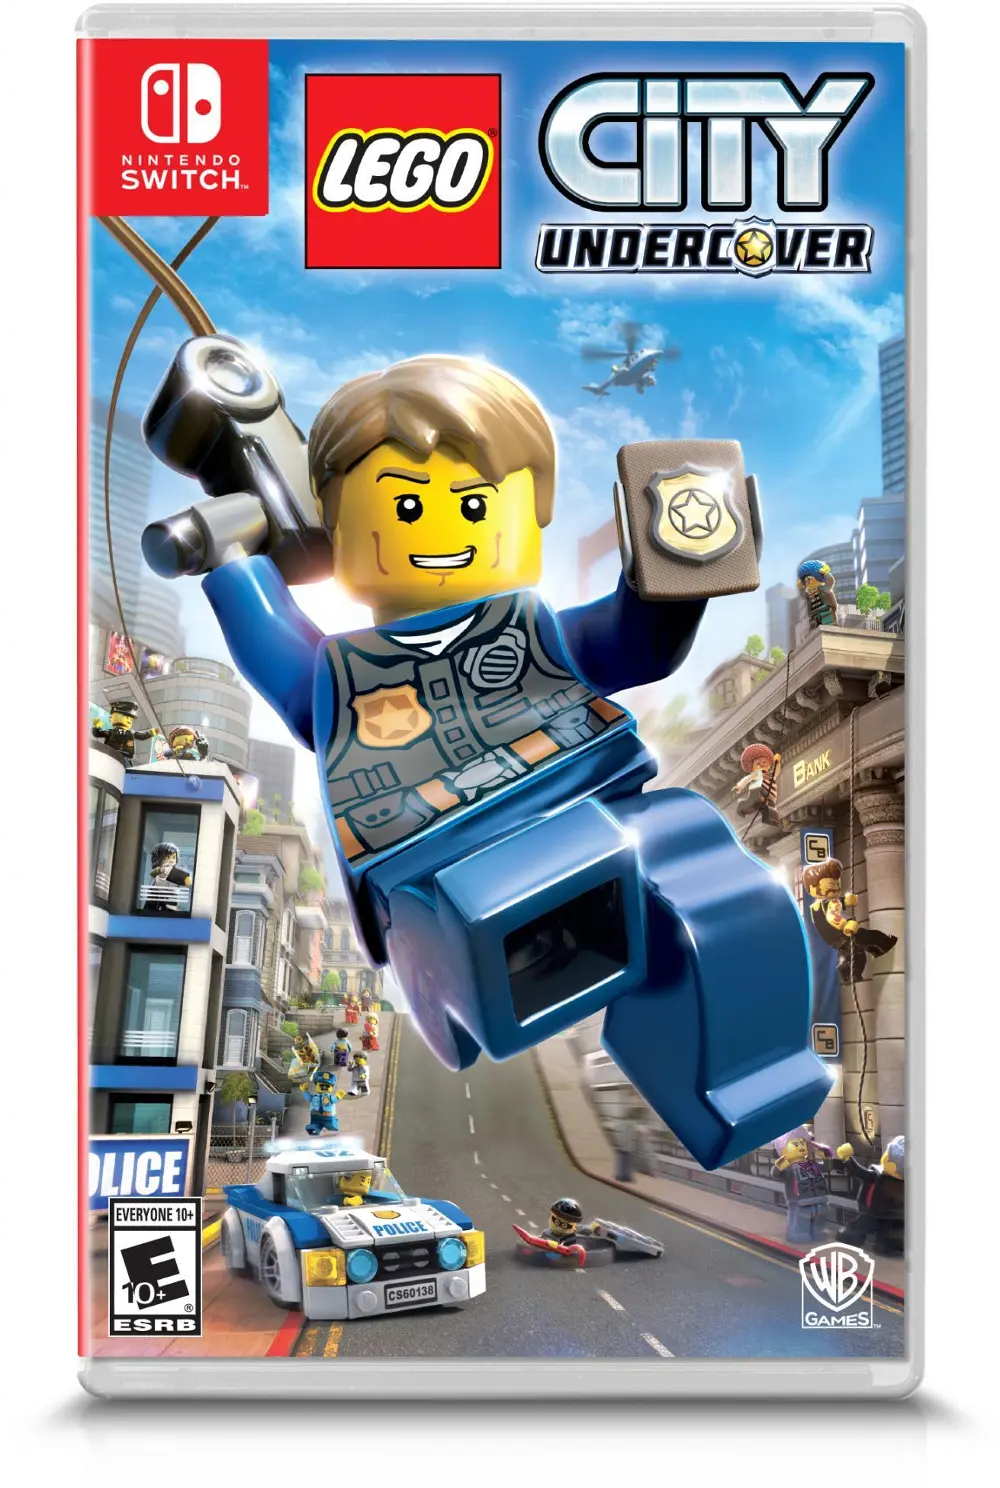 SWI/LEGO_CITY_UNDER Lego City Undercover - Nintendo Switch-1